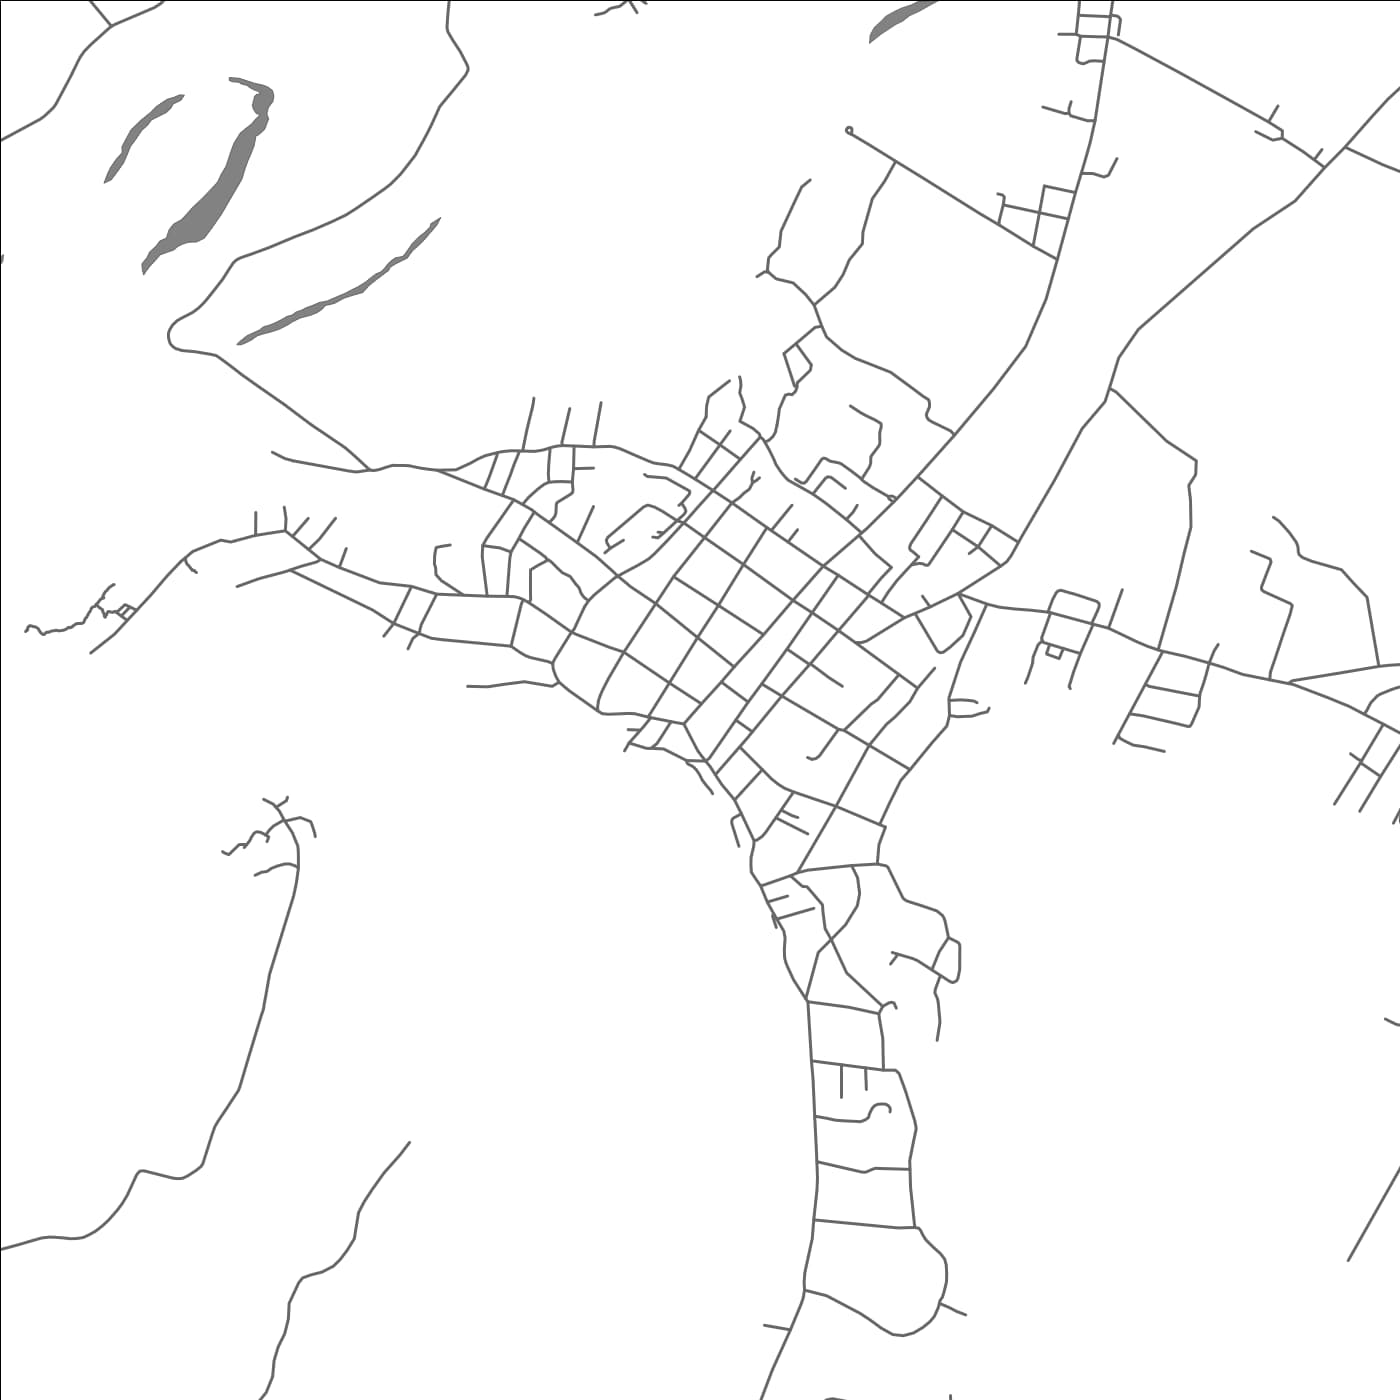 ROAD MAP OF NEIAFU, TONGA BY MAPBAKES